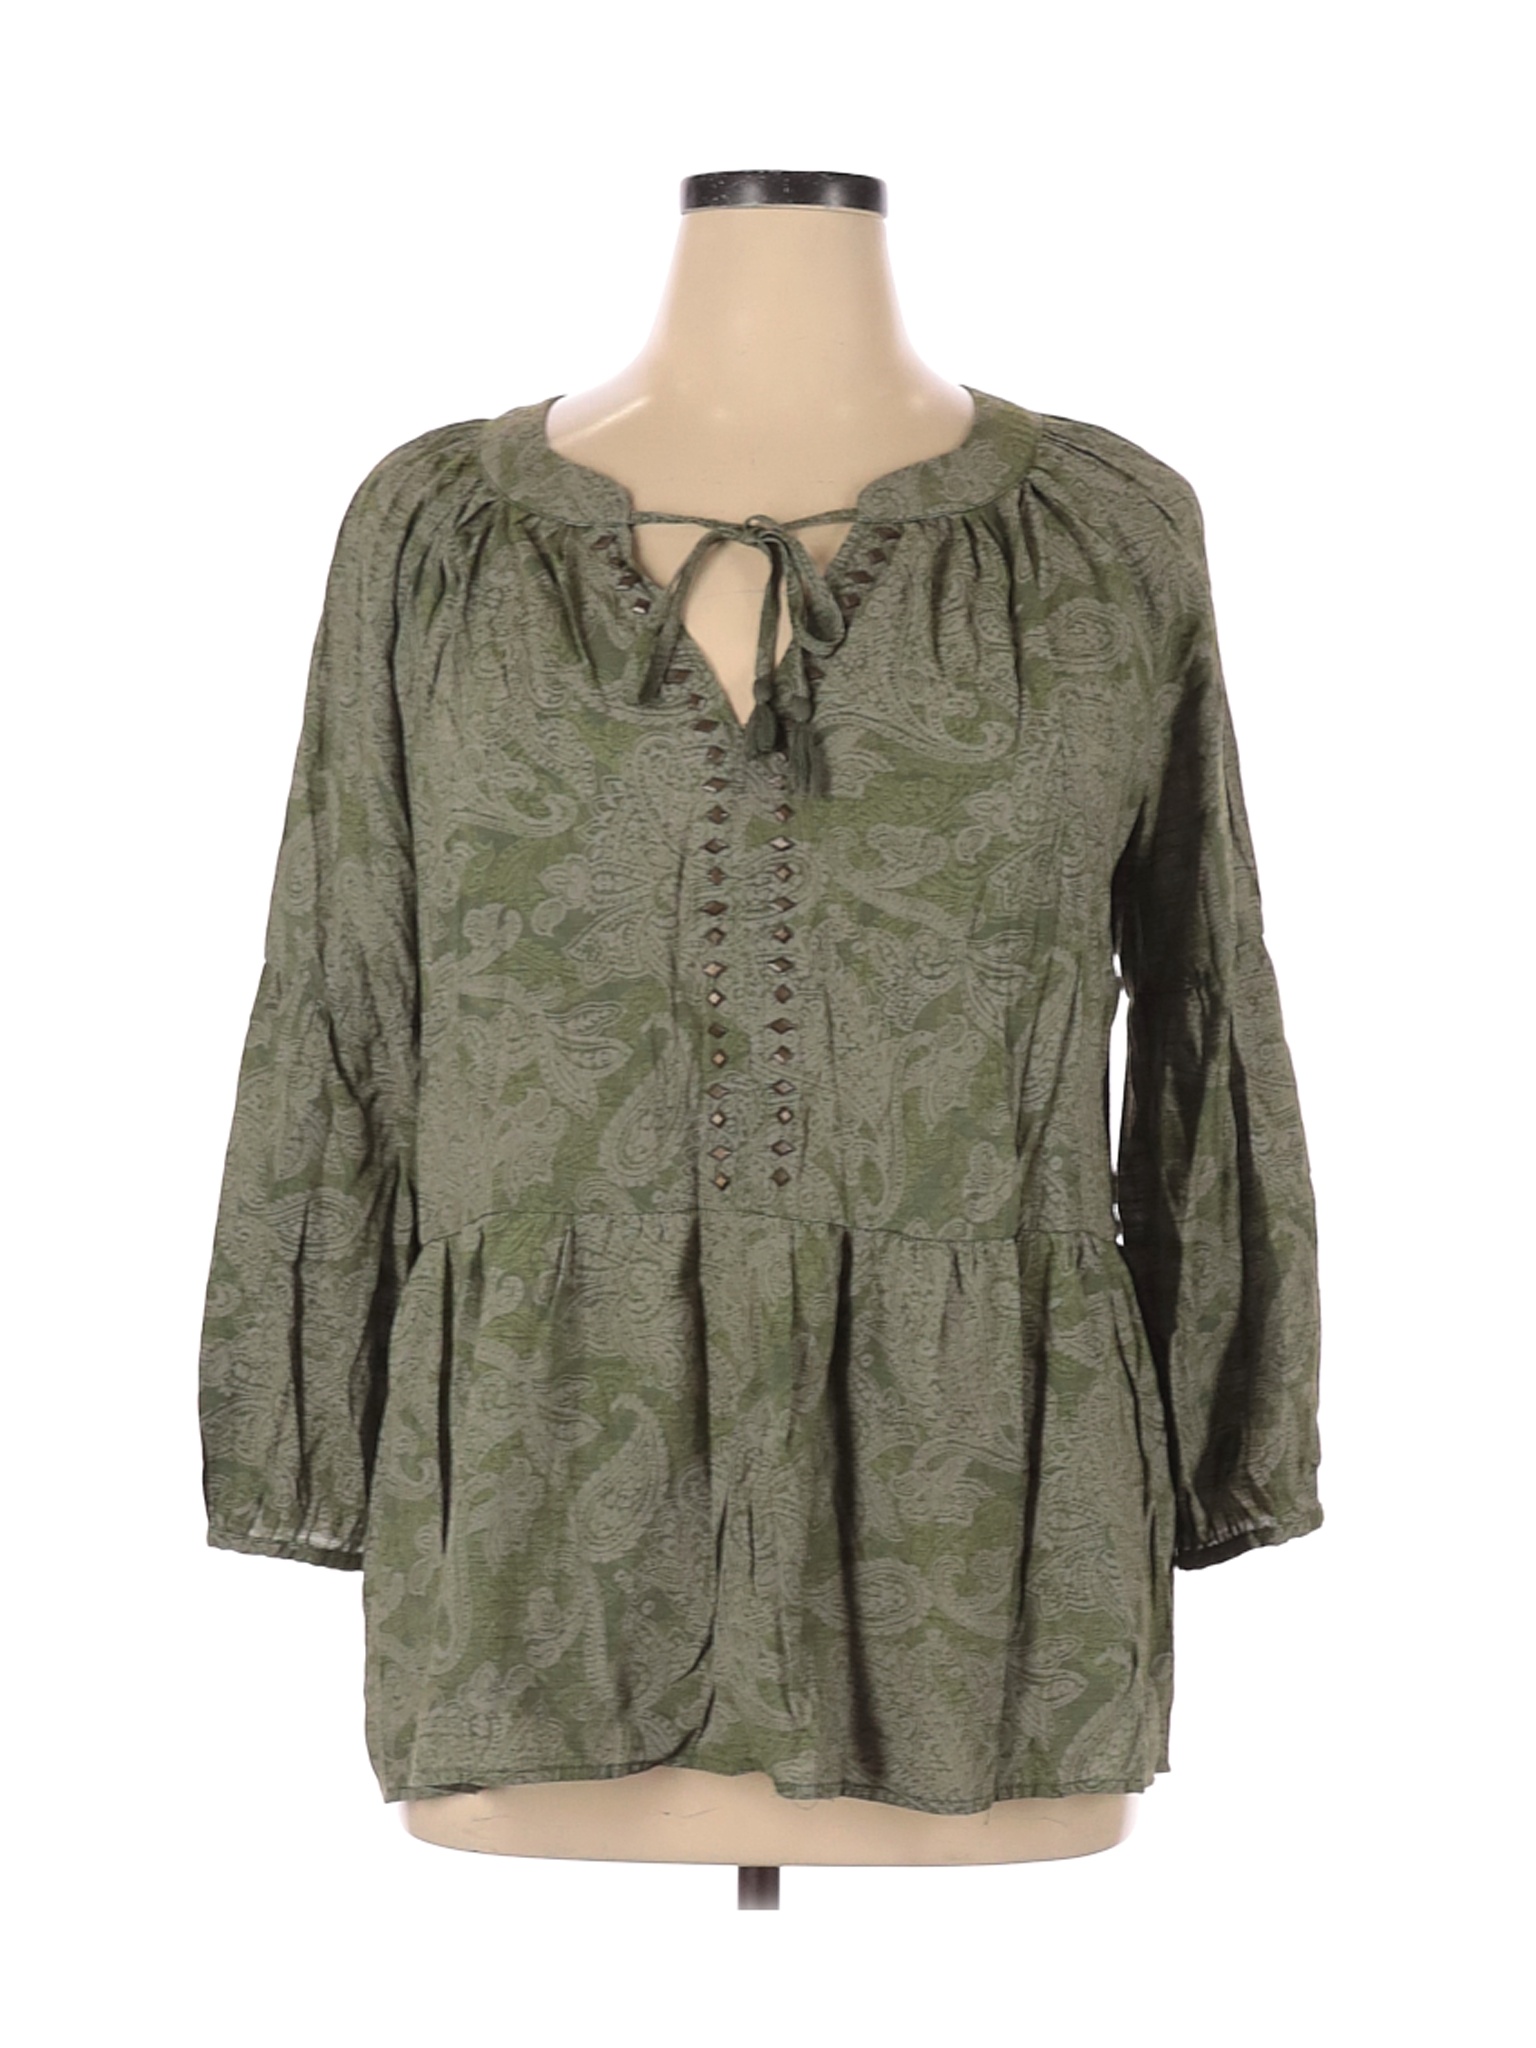 Liz Claiborne Women Green 3/4 Sleeve Blouse XL | eBay